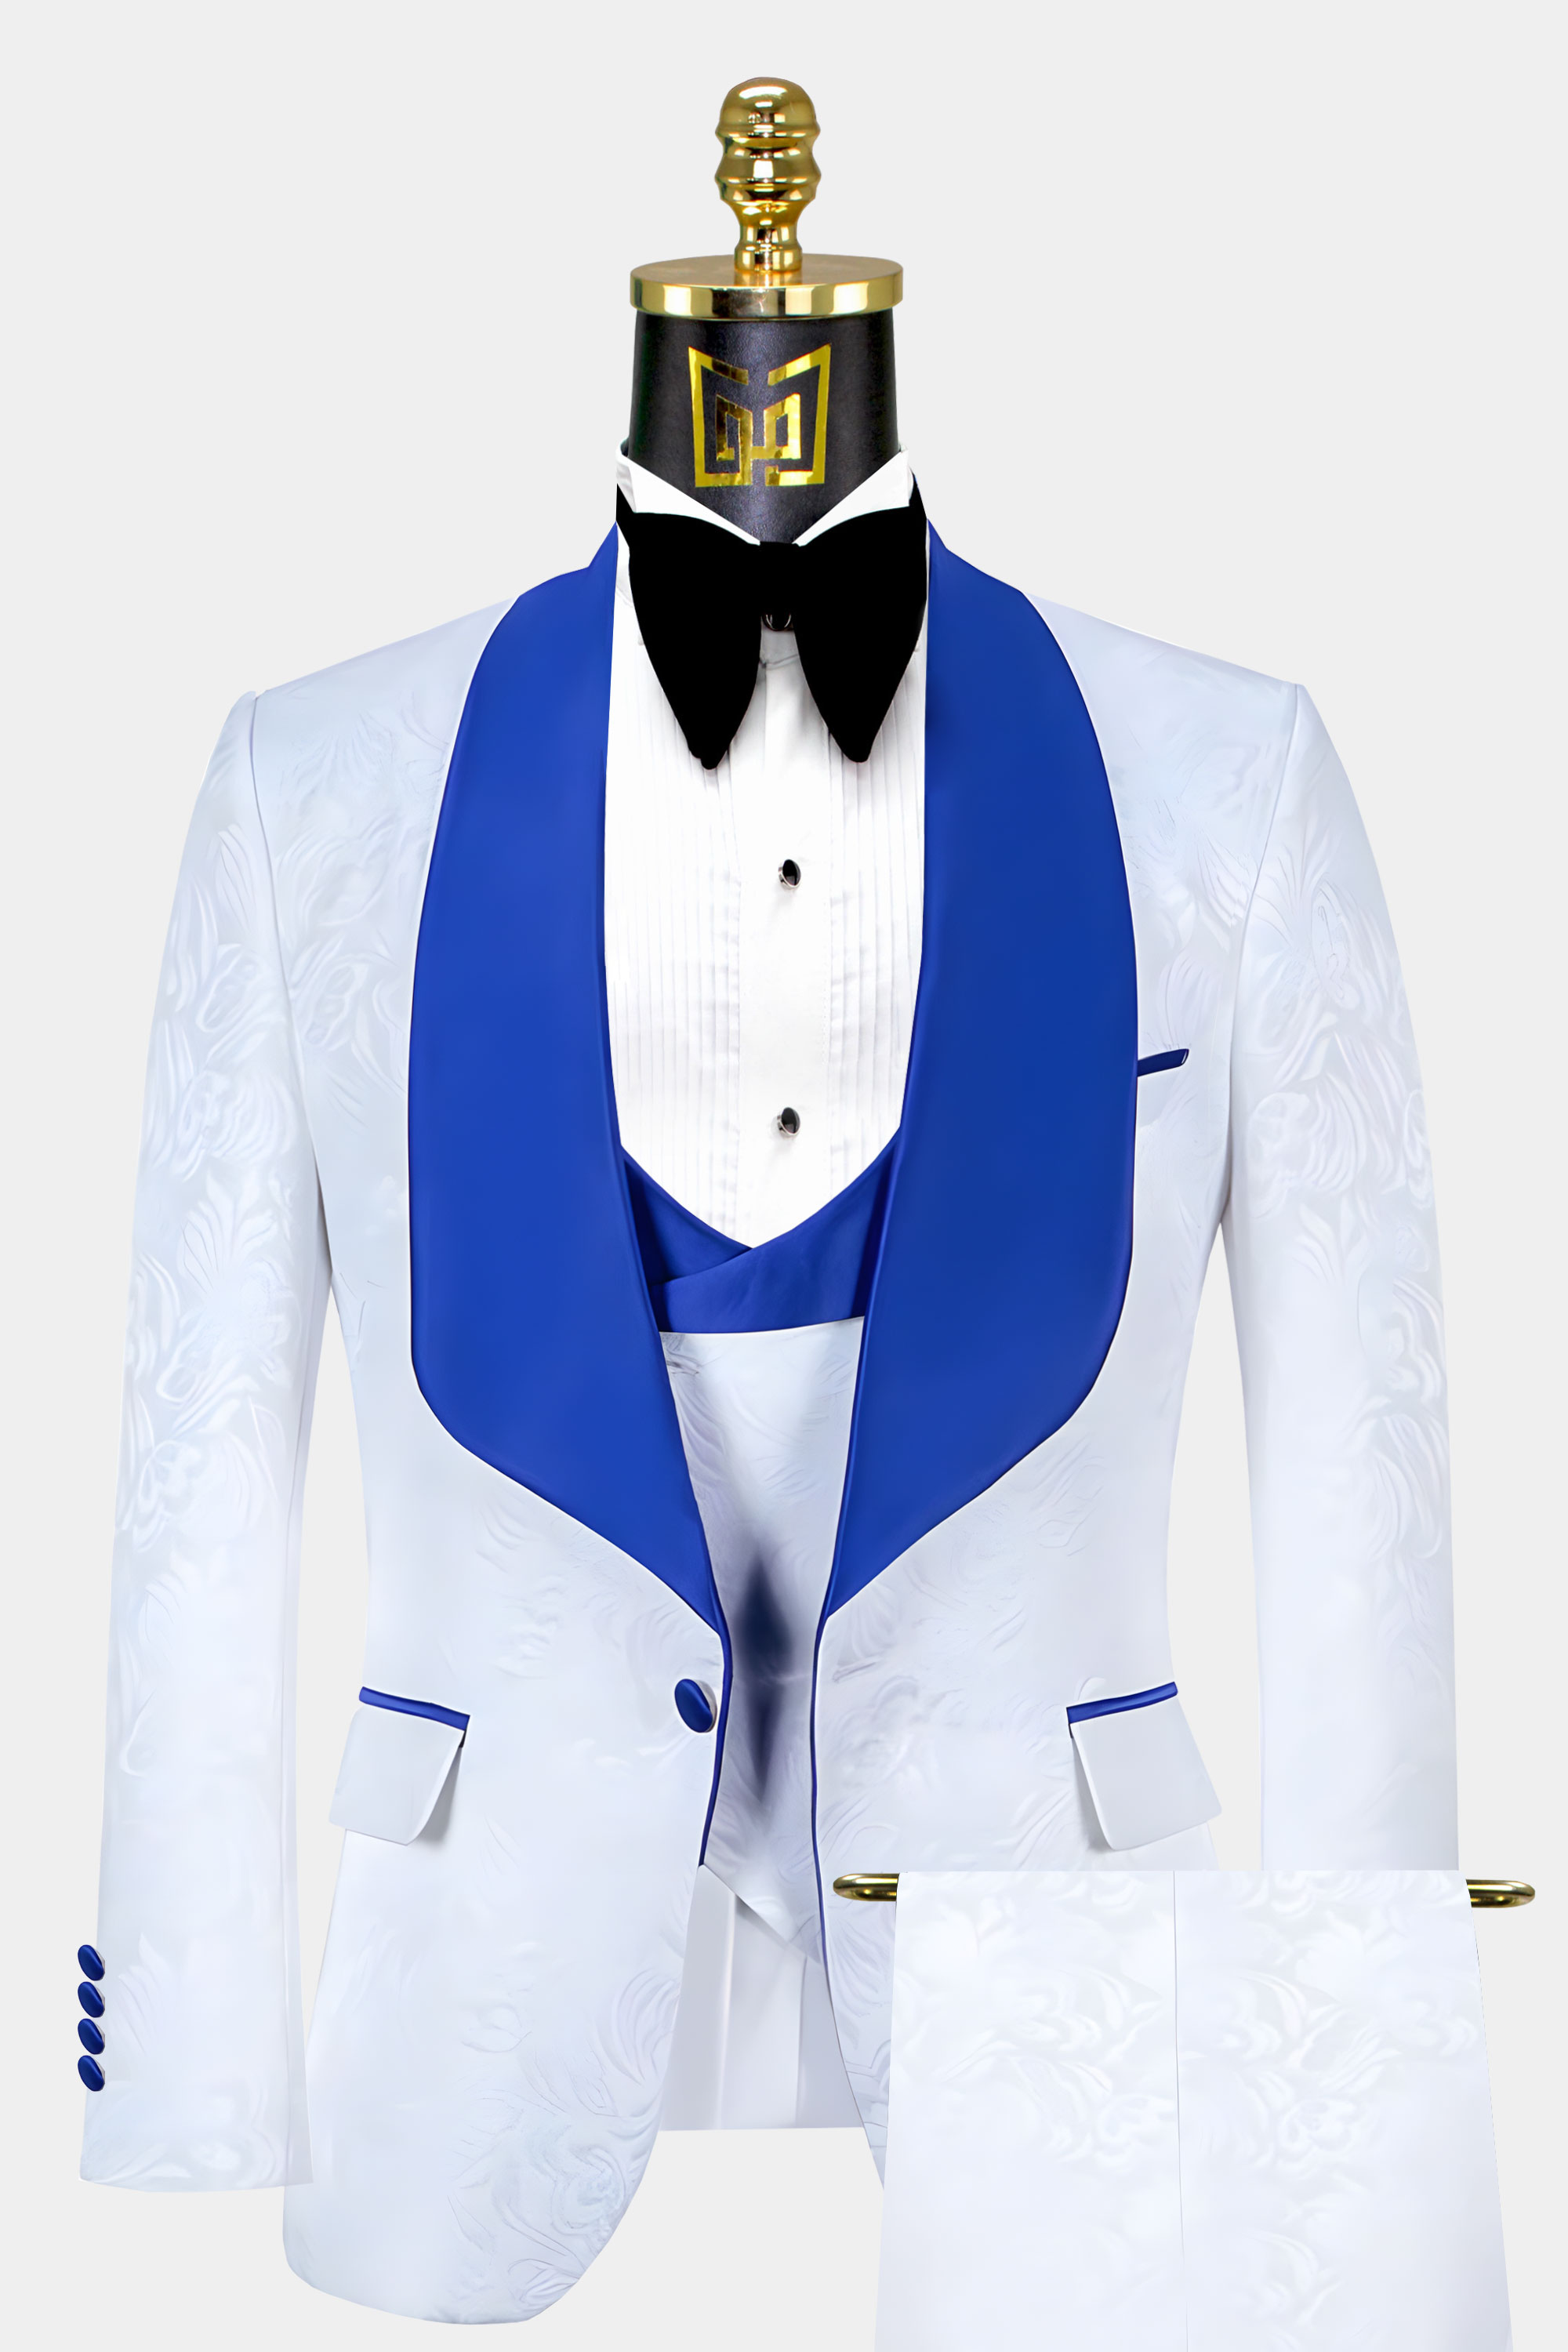 White Floral Tuxedo with Royal Blue Trim - 3 Piece